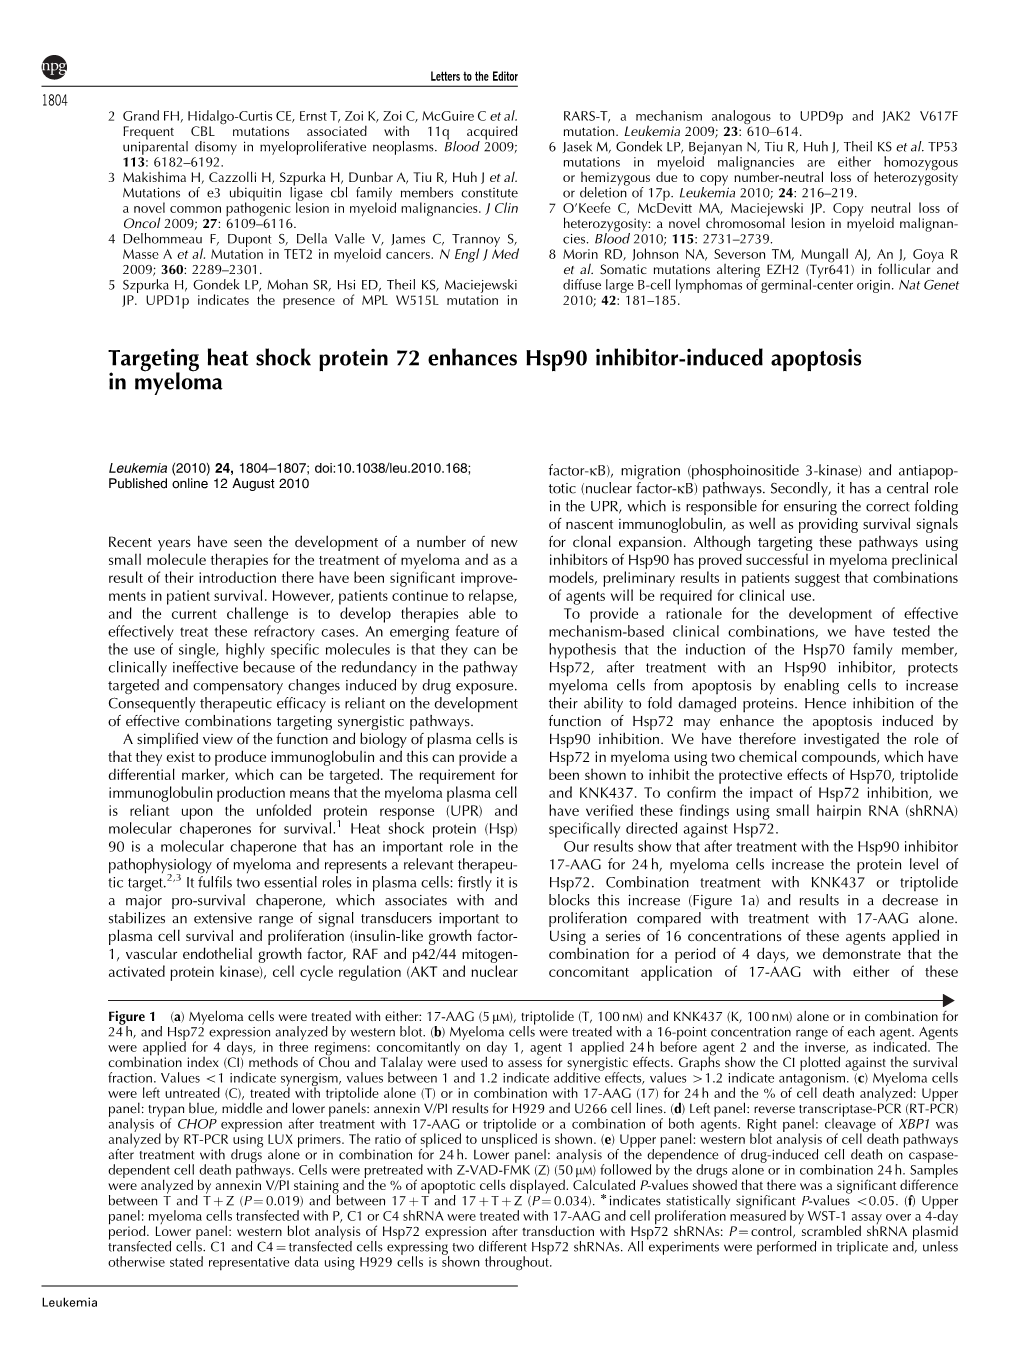 Targeting Heat Shock Protein 72 Enhances Hsp90 Inhibitor-Induced Apoptosis in Myeloma